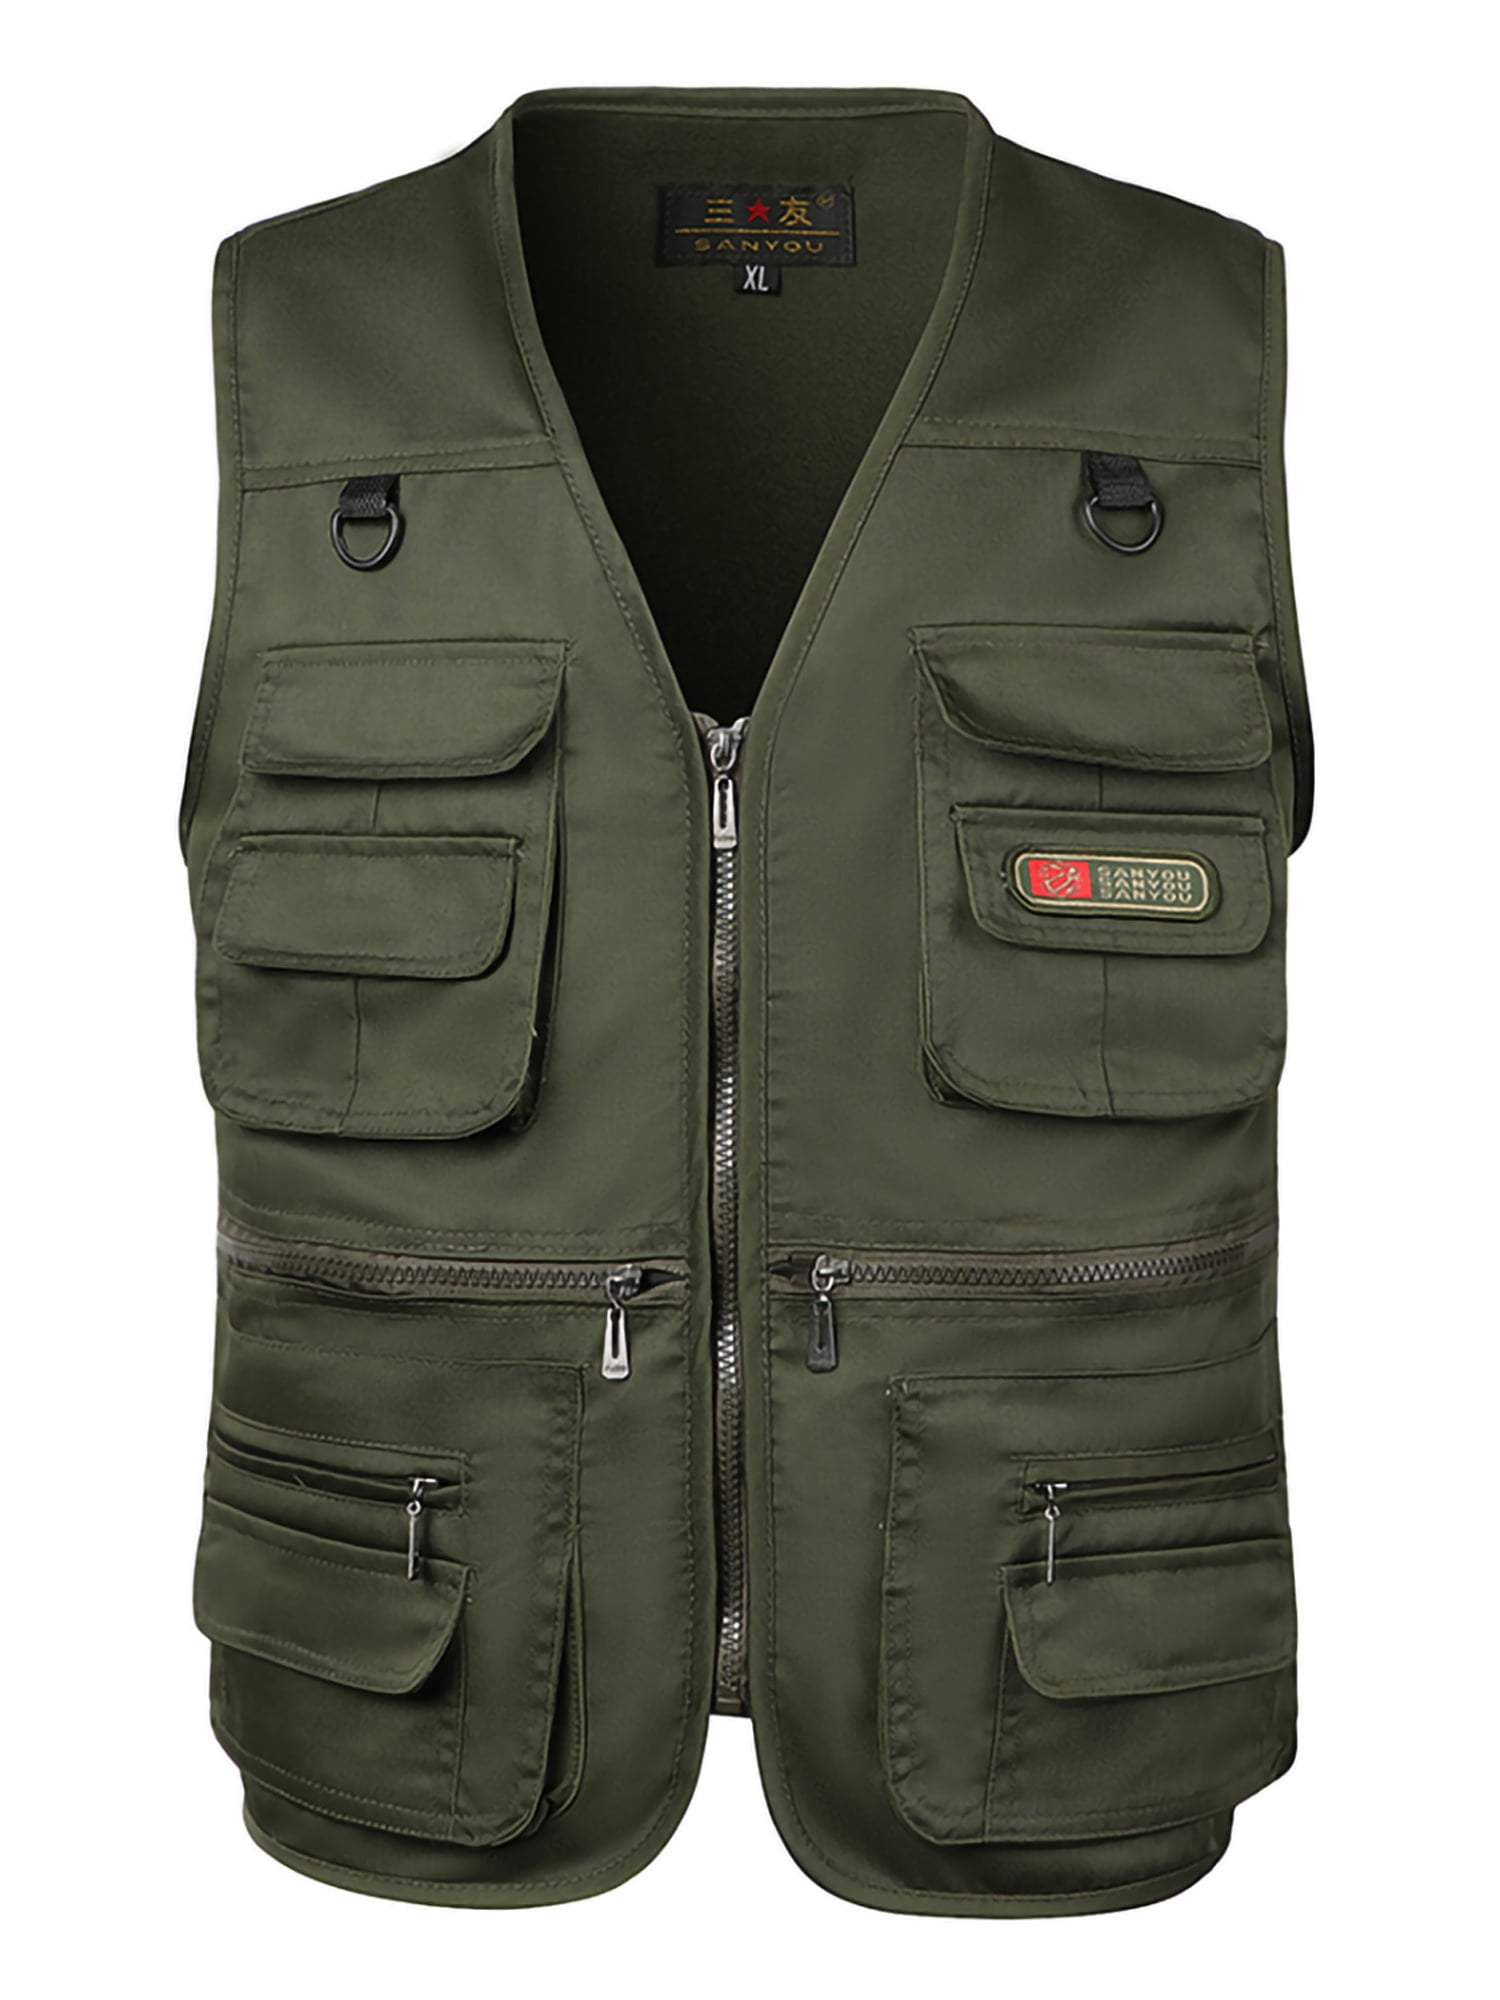 Men's Fishing Multi-Pocket Utility Vest Shooting Hunting Waistcoat Jacket Top 